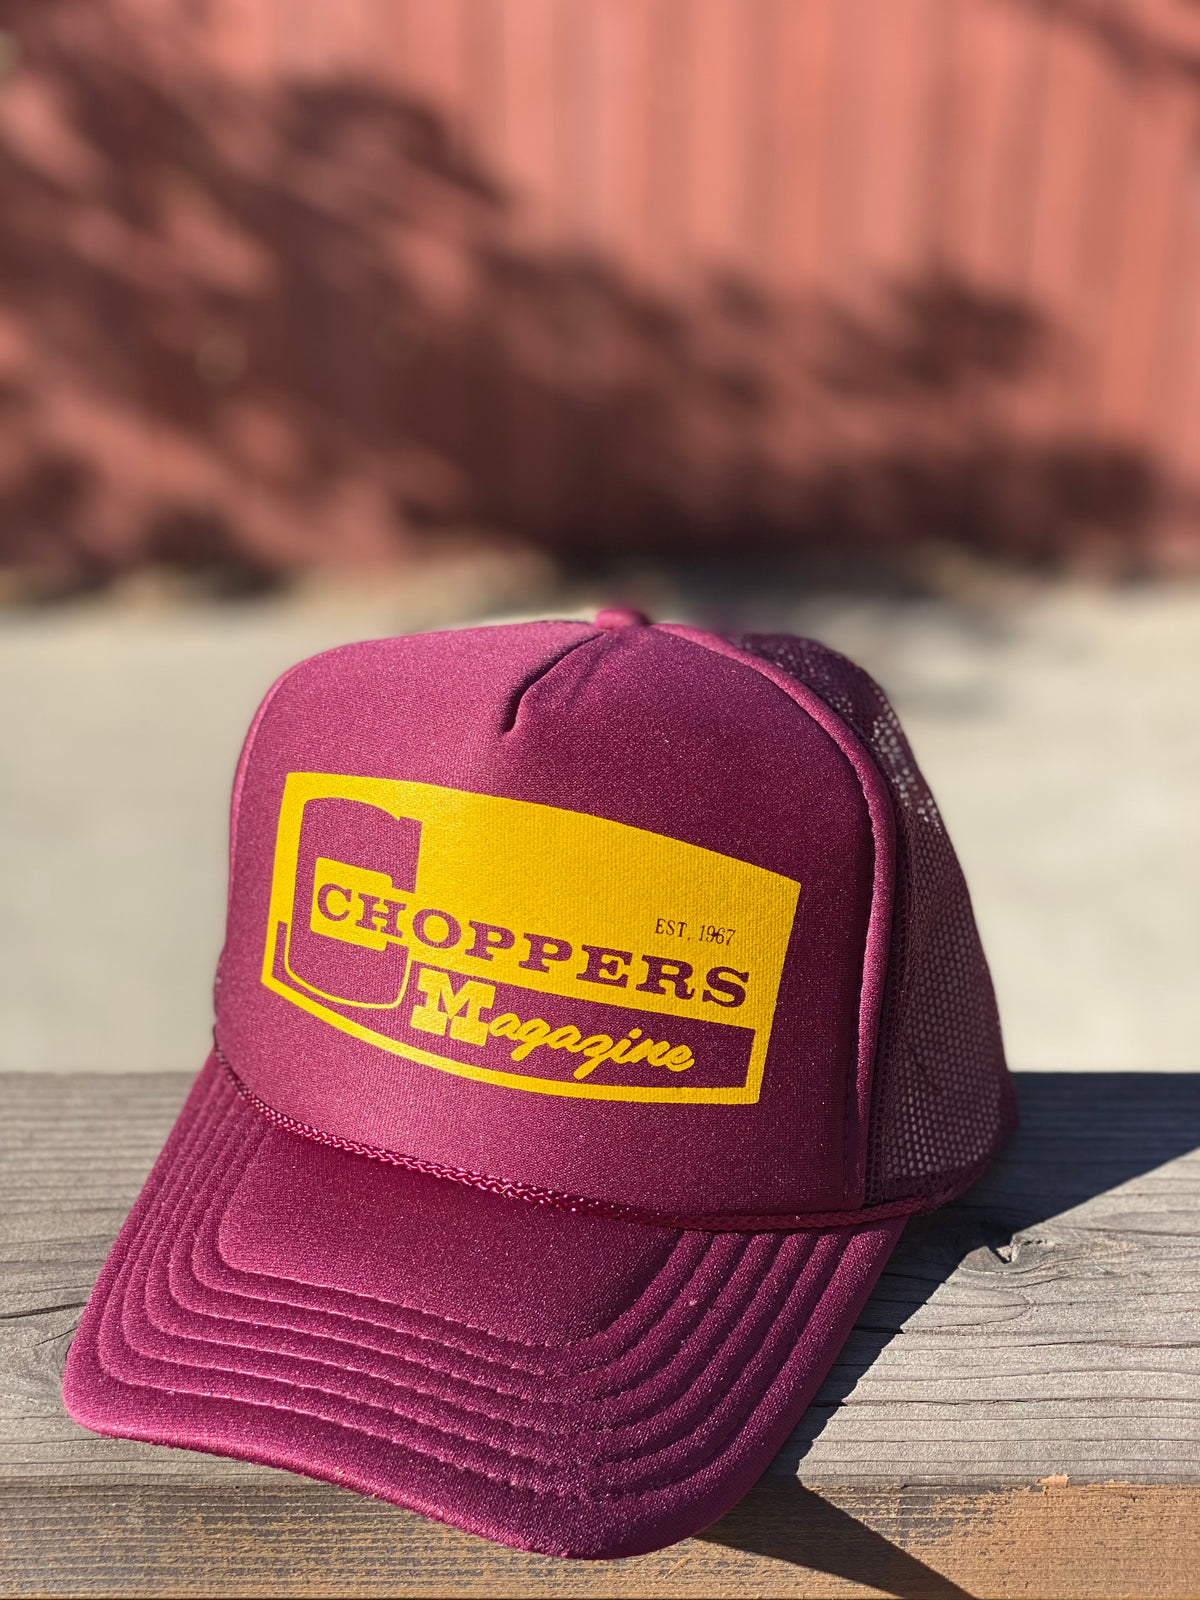 dixie chopper hat